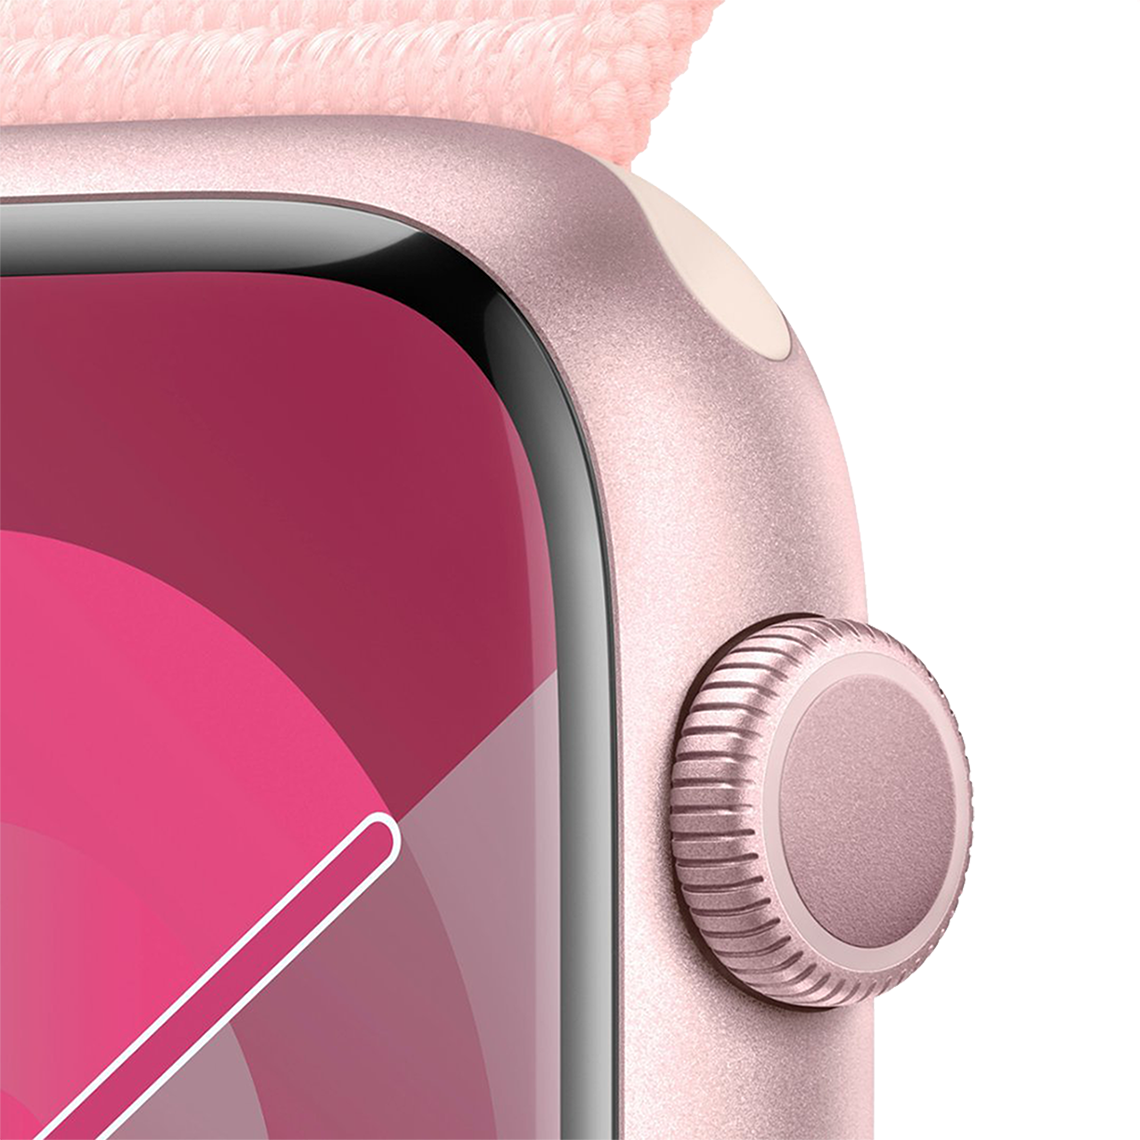 Apple Watch Series 9 45mm GPS - Pink w/ Light Pink Sport Loop, Open Box